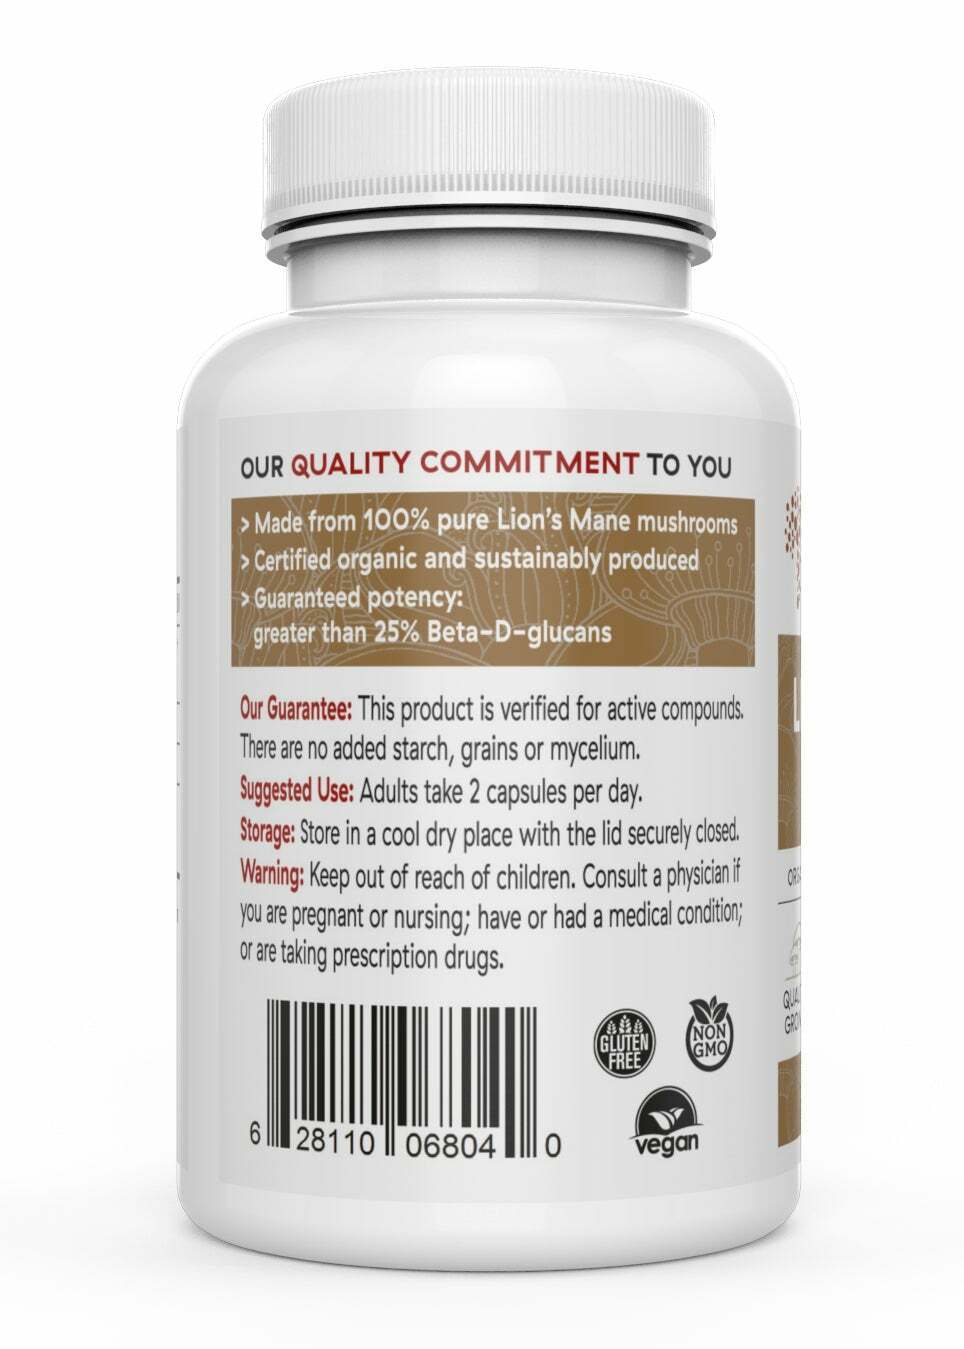 Real Mushrooms Organic Lions Mane Mushroom Extract Cognition Vegan 300 caps NEW